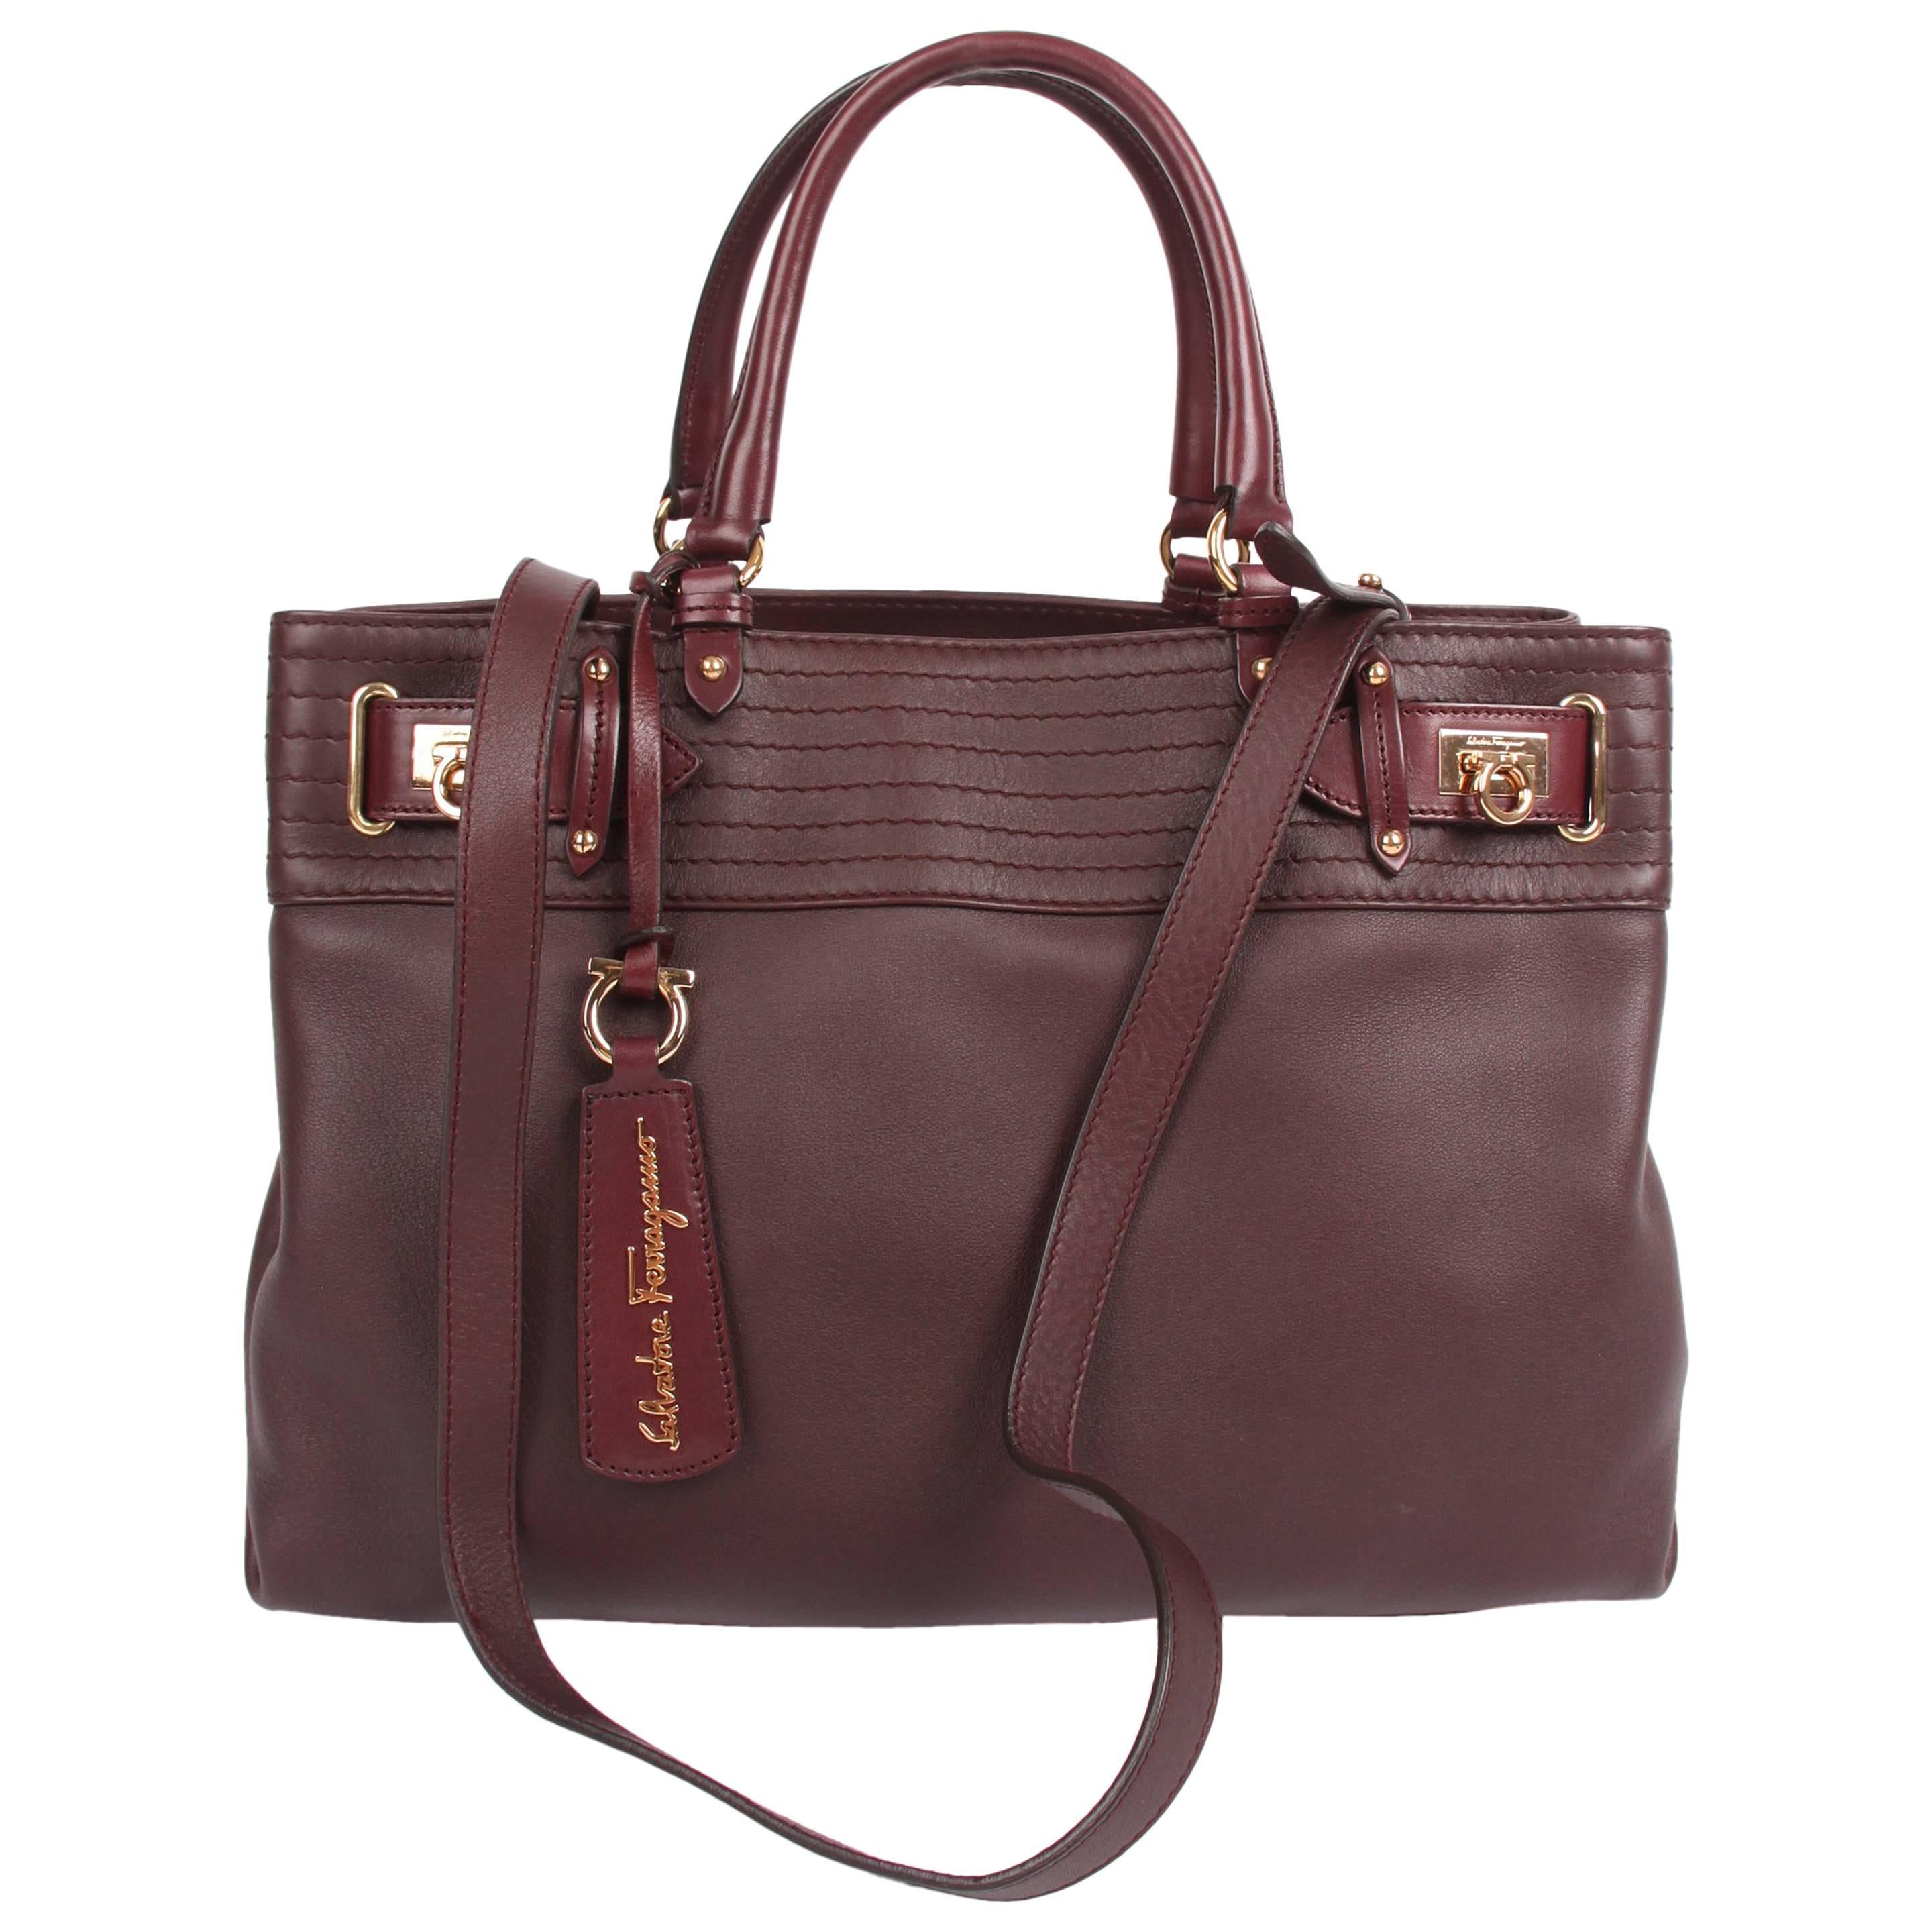 Salvatore Ferragamo Leather Buckled Tote Bag Visone - burgundy red